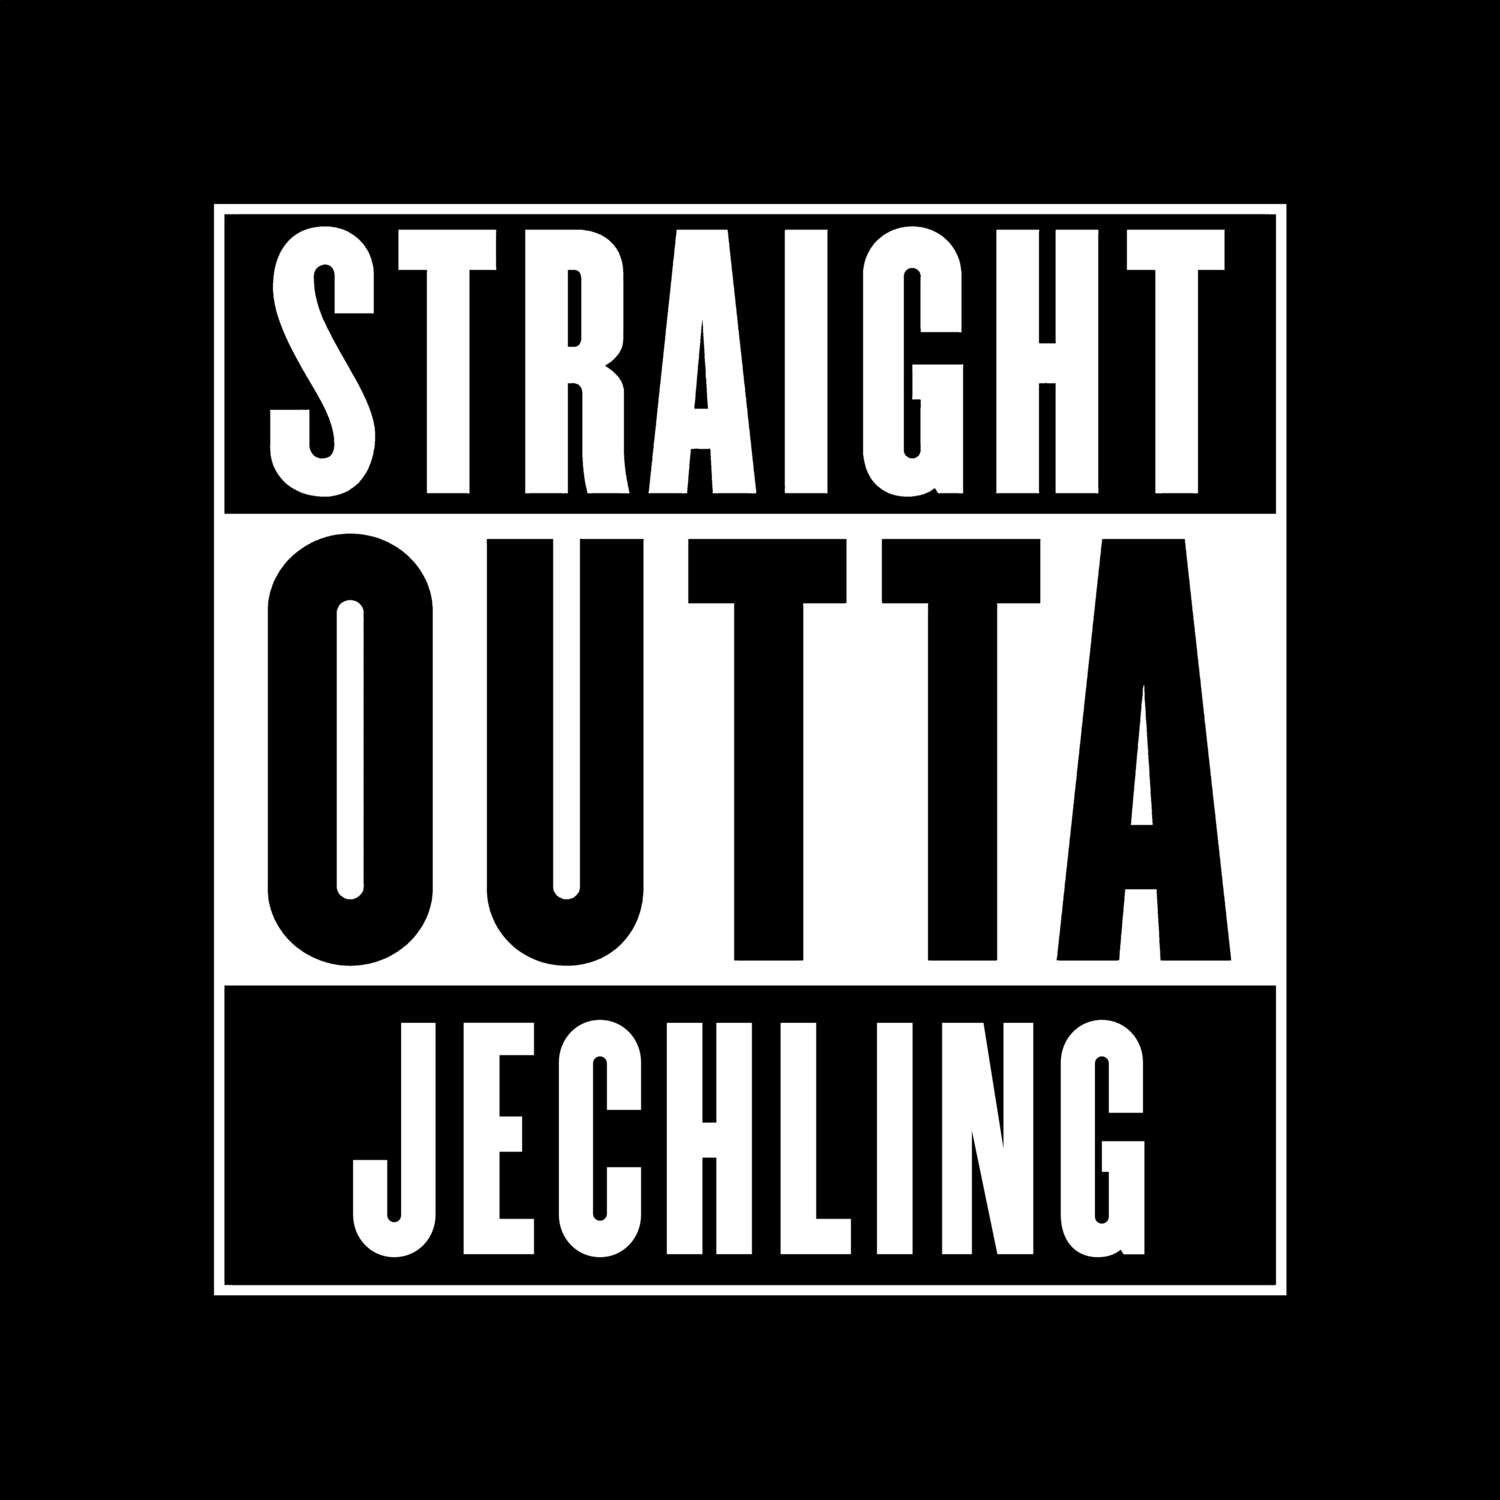 Jechling T-Shirt »Straight Outta«